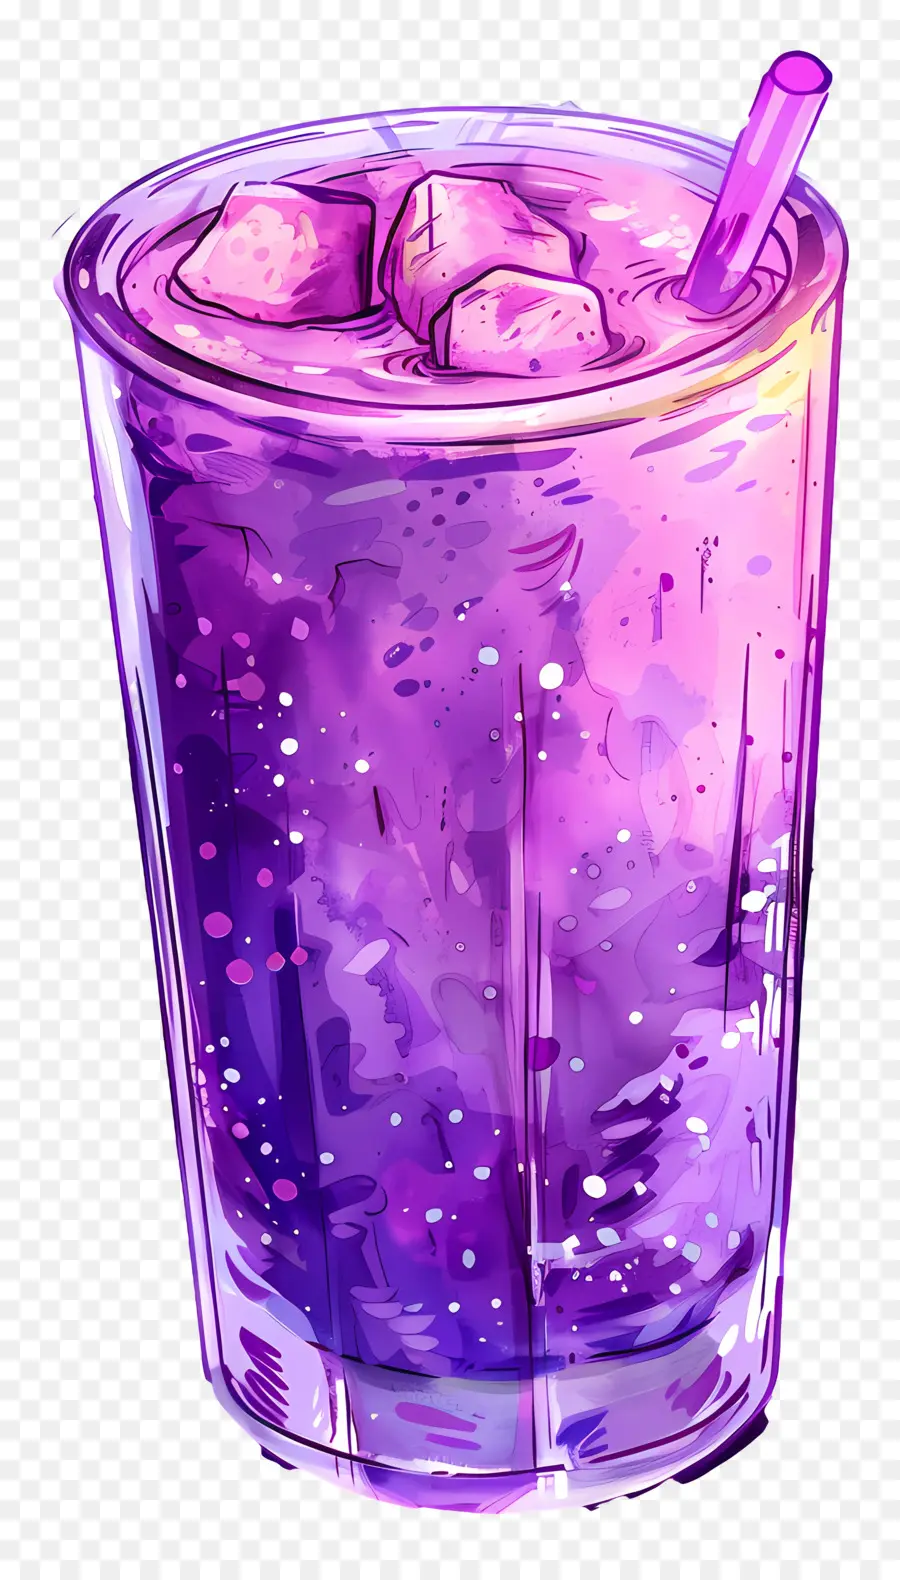 Solkadhi trinken lila Getränkesaft Soda -Eiswürfel - Lila Getränk mit Eiswürfel und Stroh